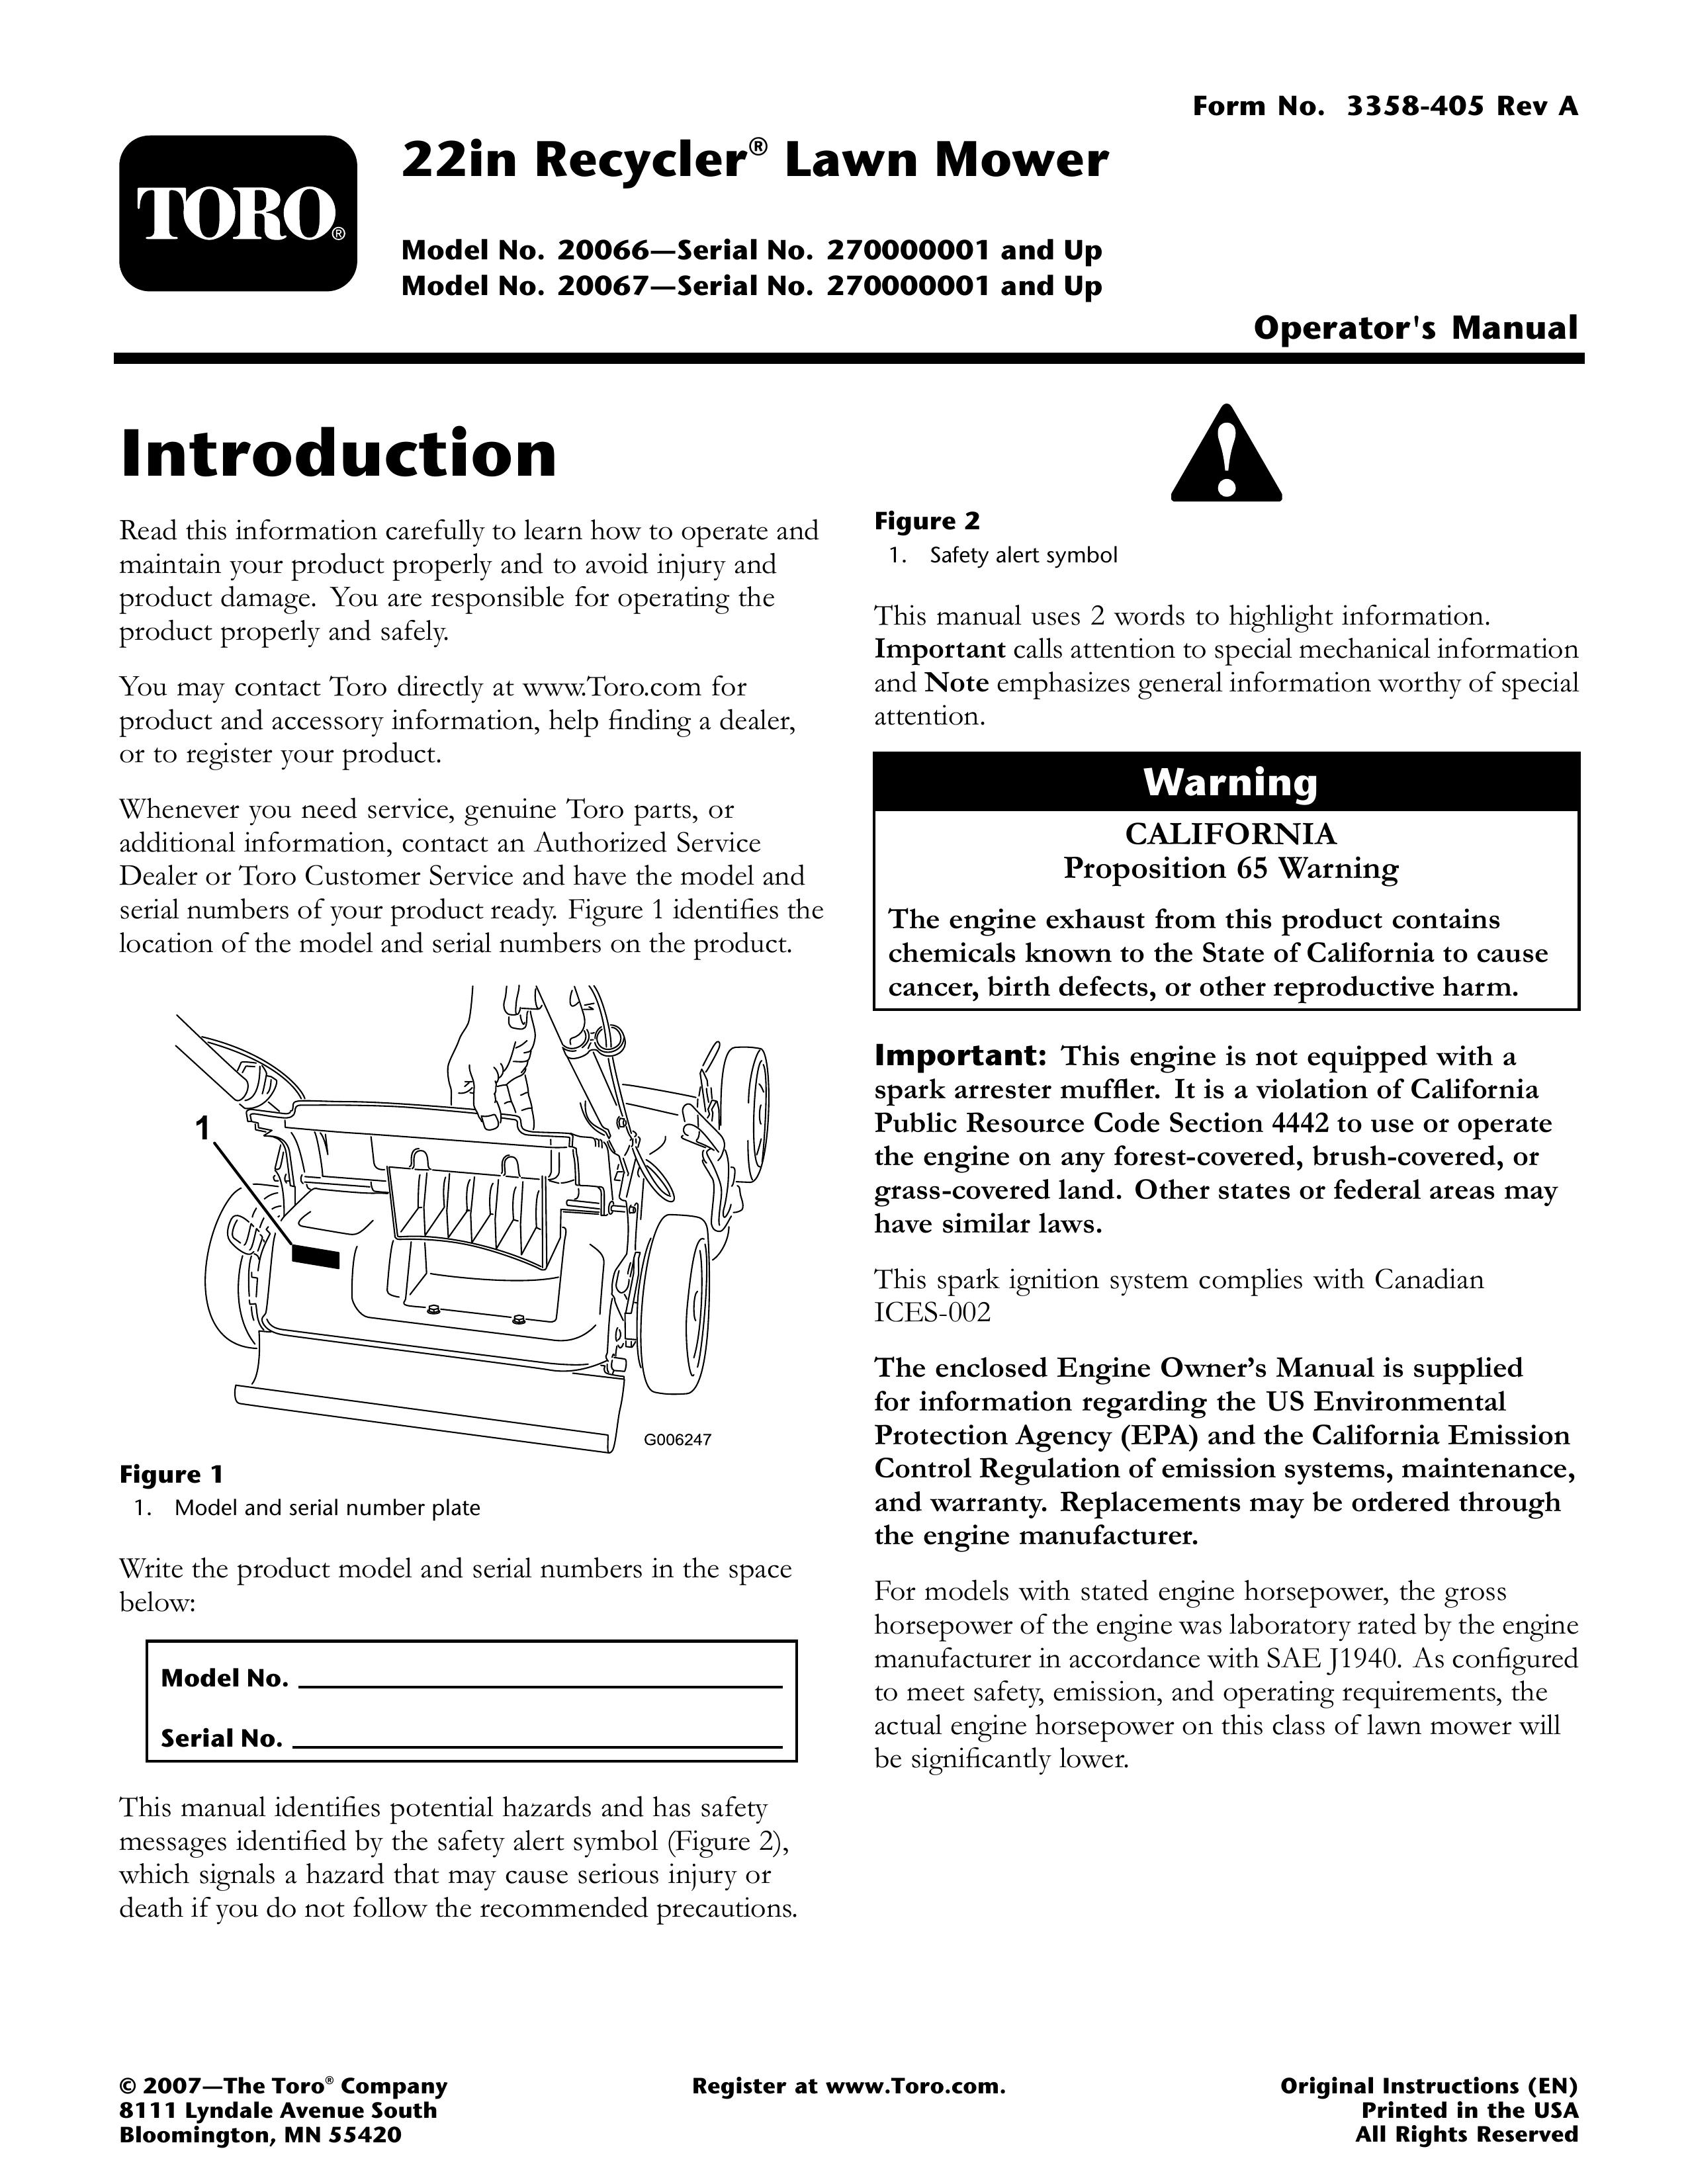 Toro 20066 Lawn Mower User Manual